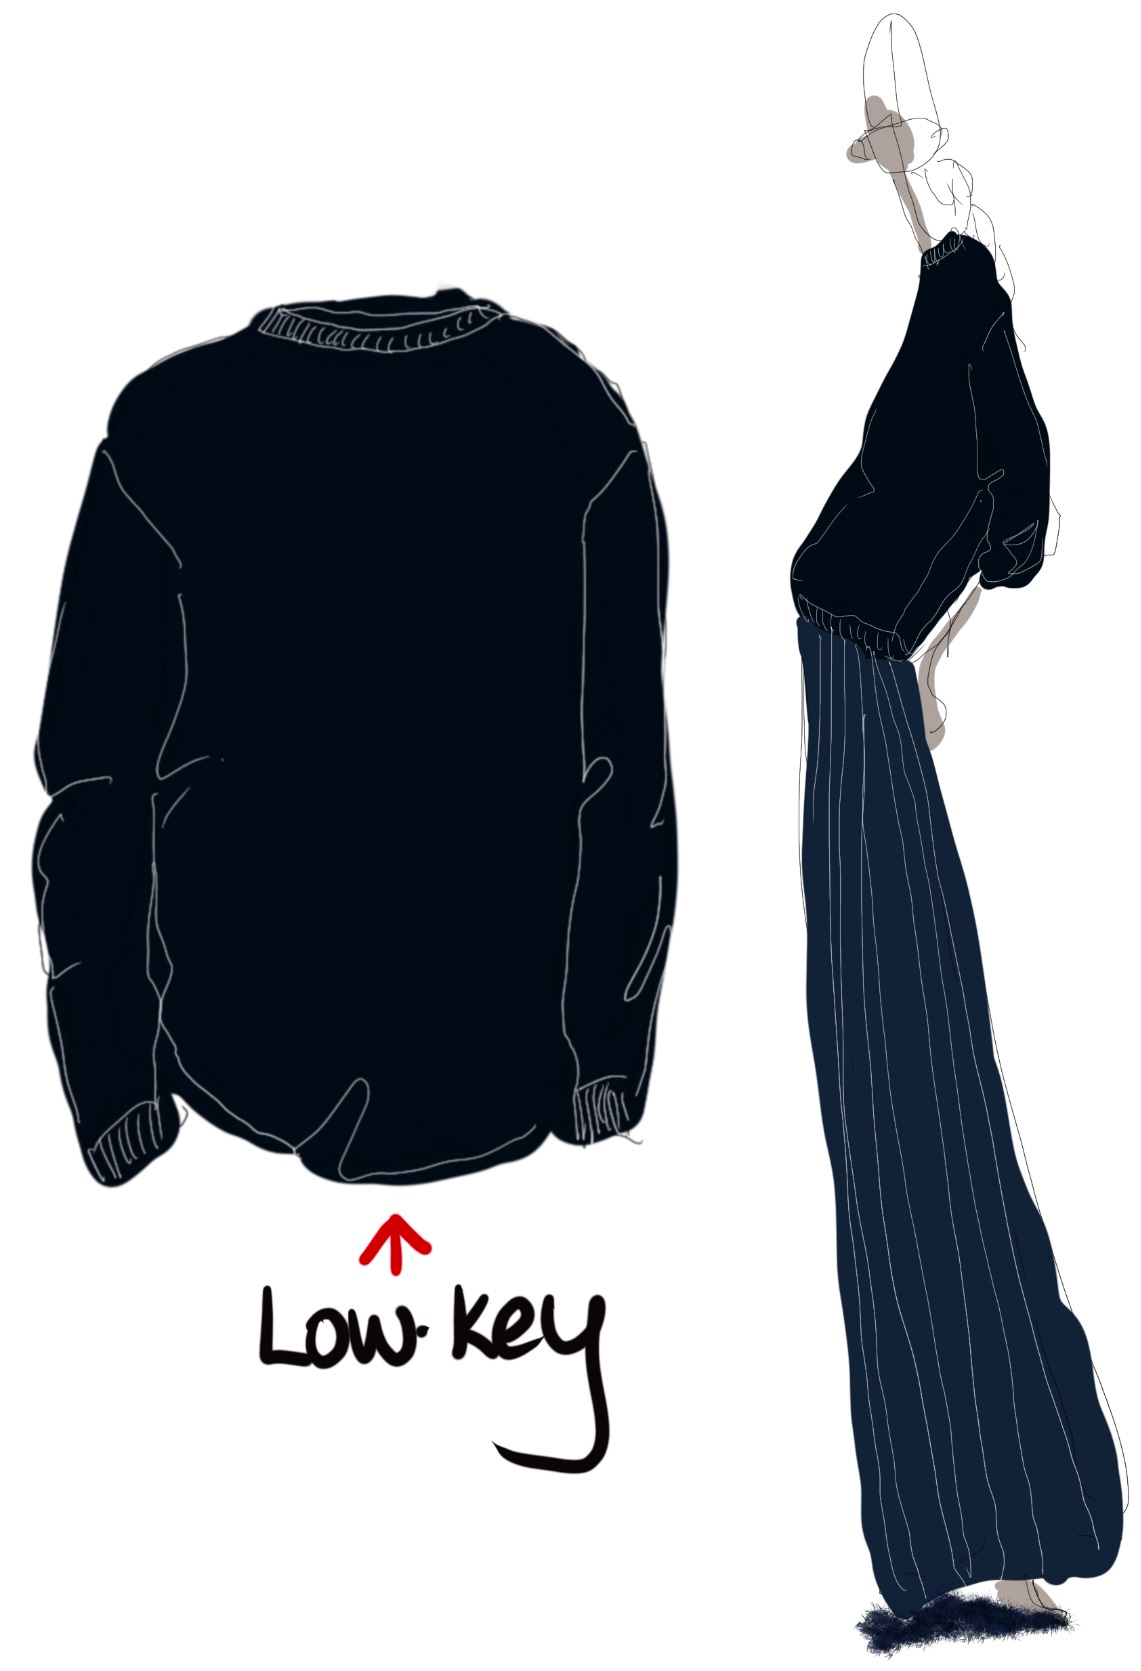 illustration of low key sweatshirt and woman wearing it